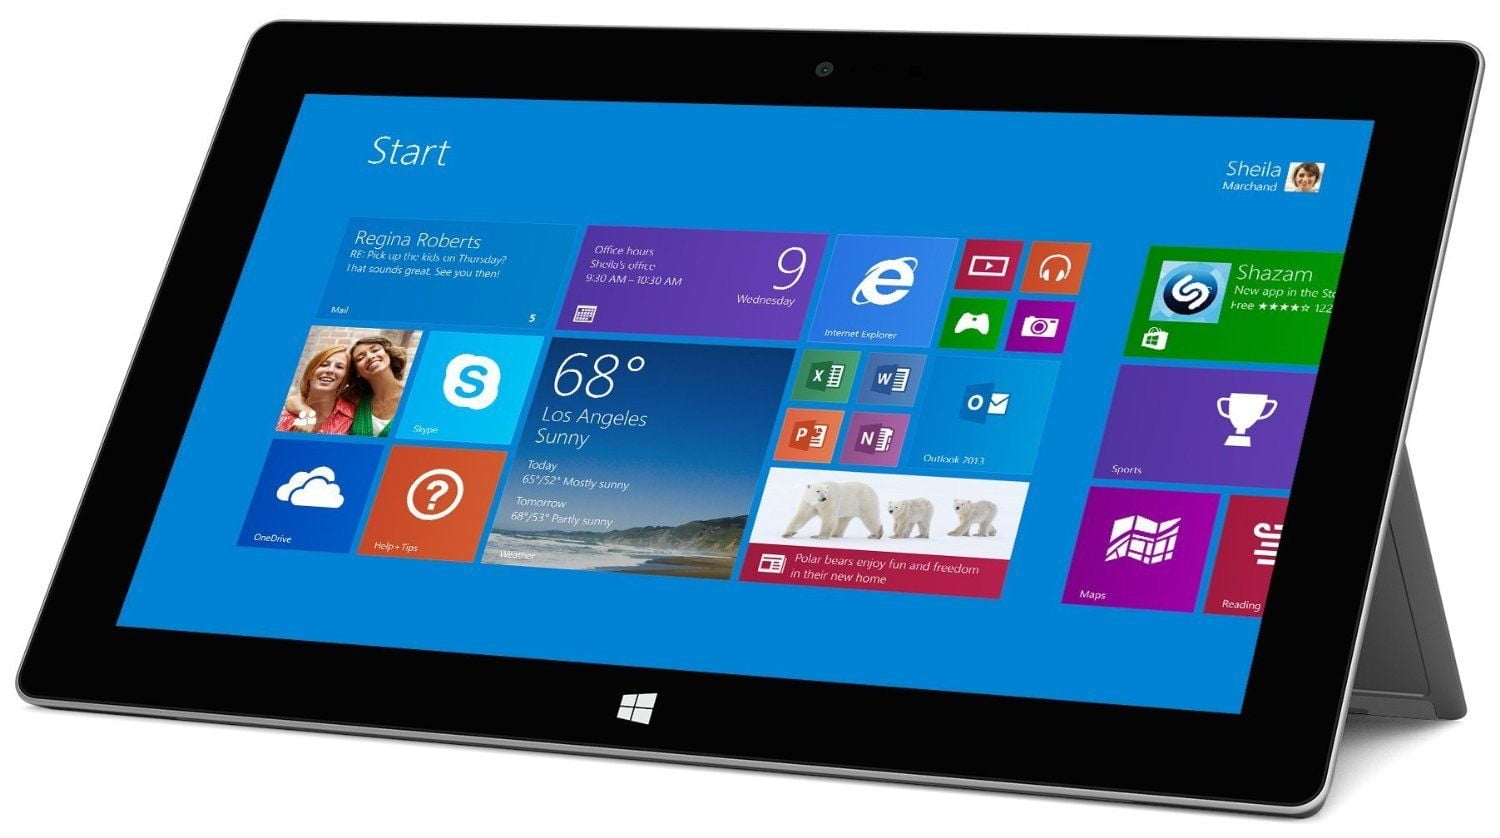 scrapbook call groove Microsoft Surface 2 64GB Windows RT 8.1 - Walmart.com